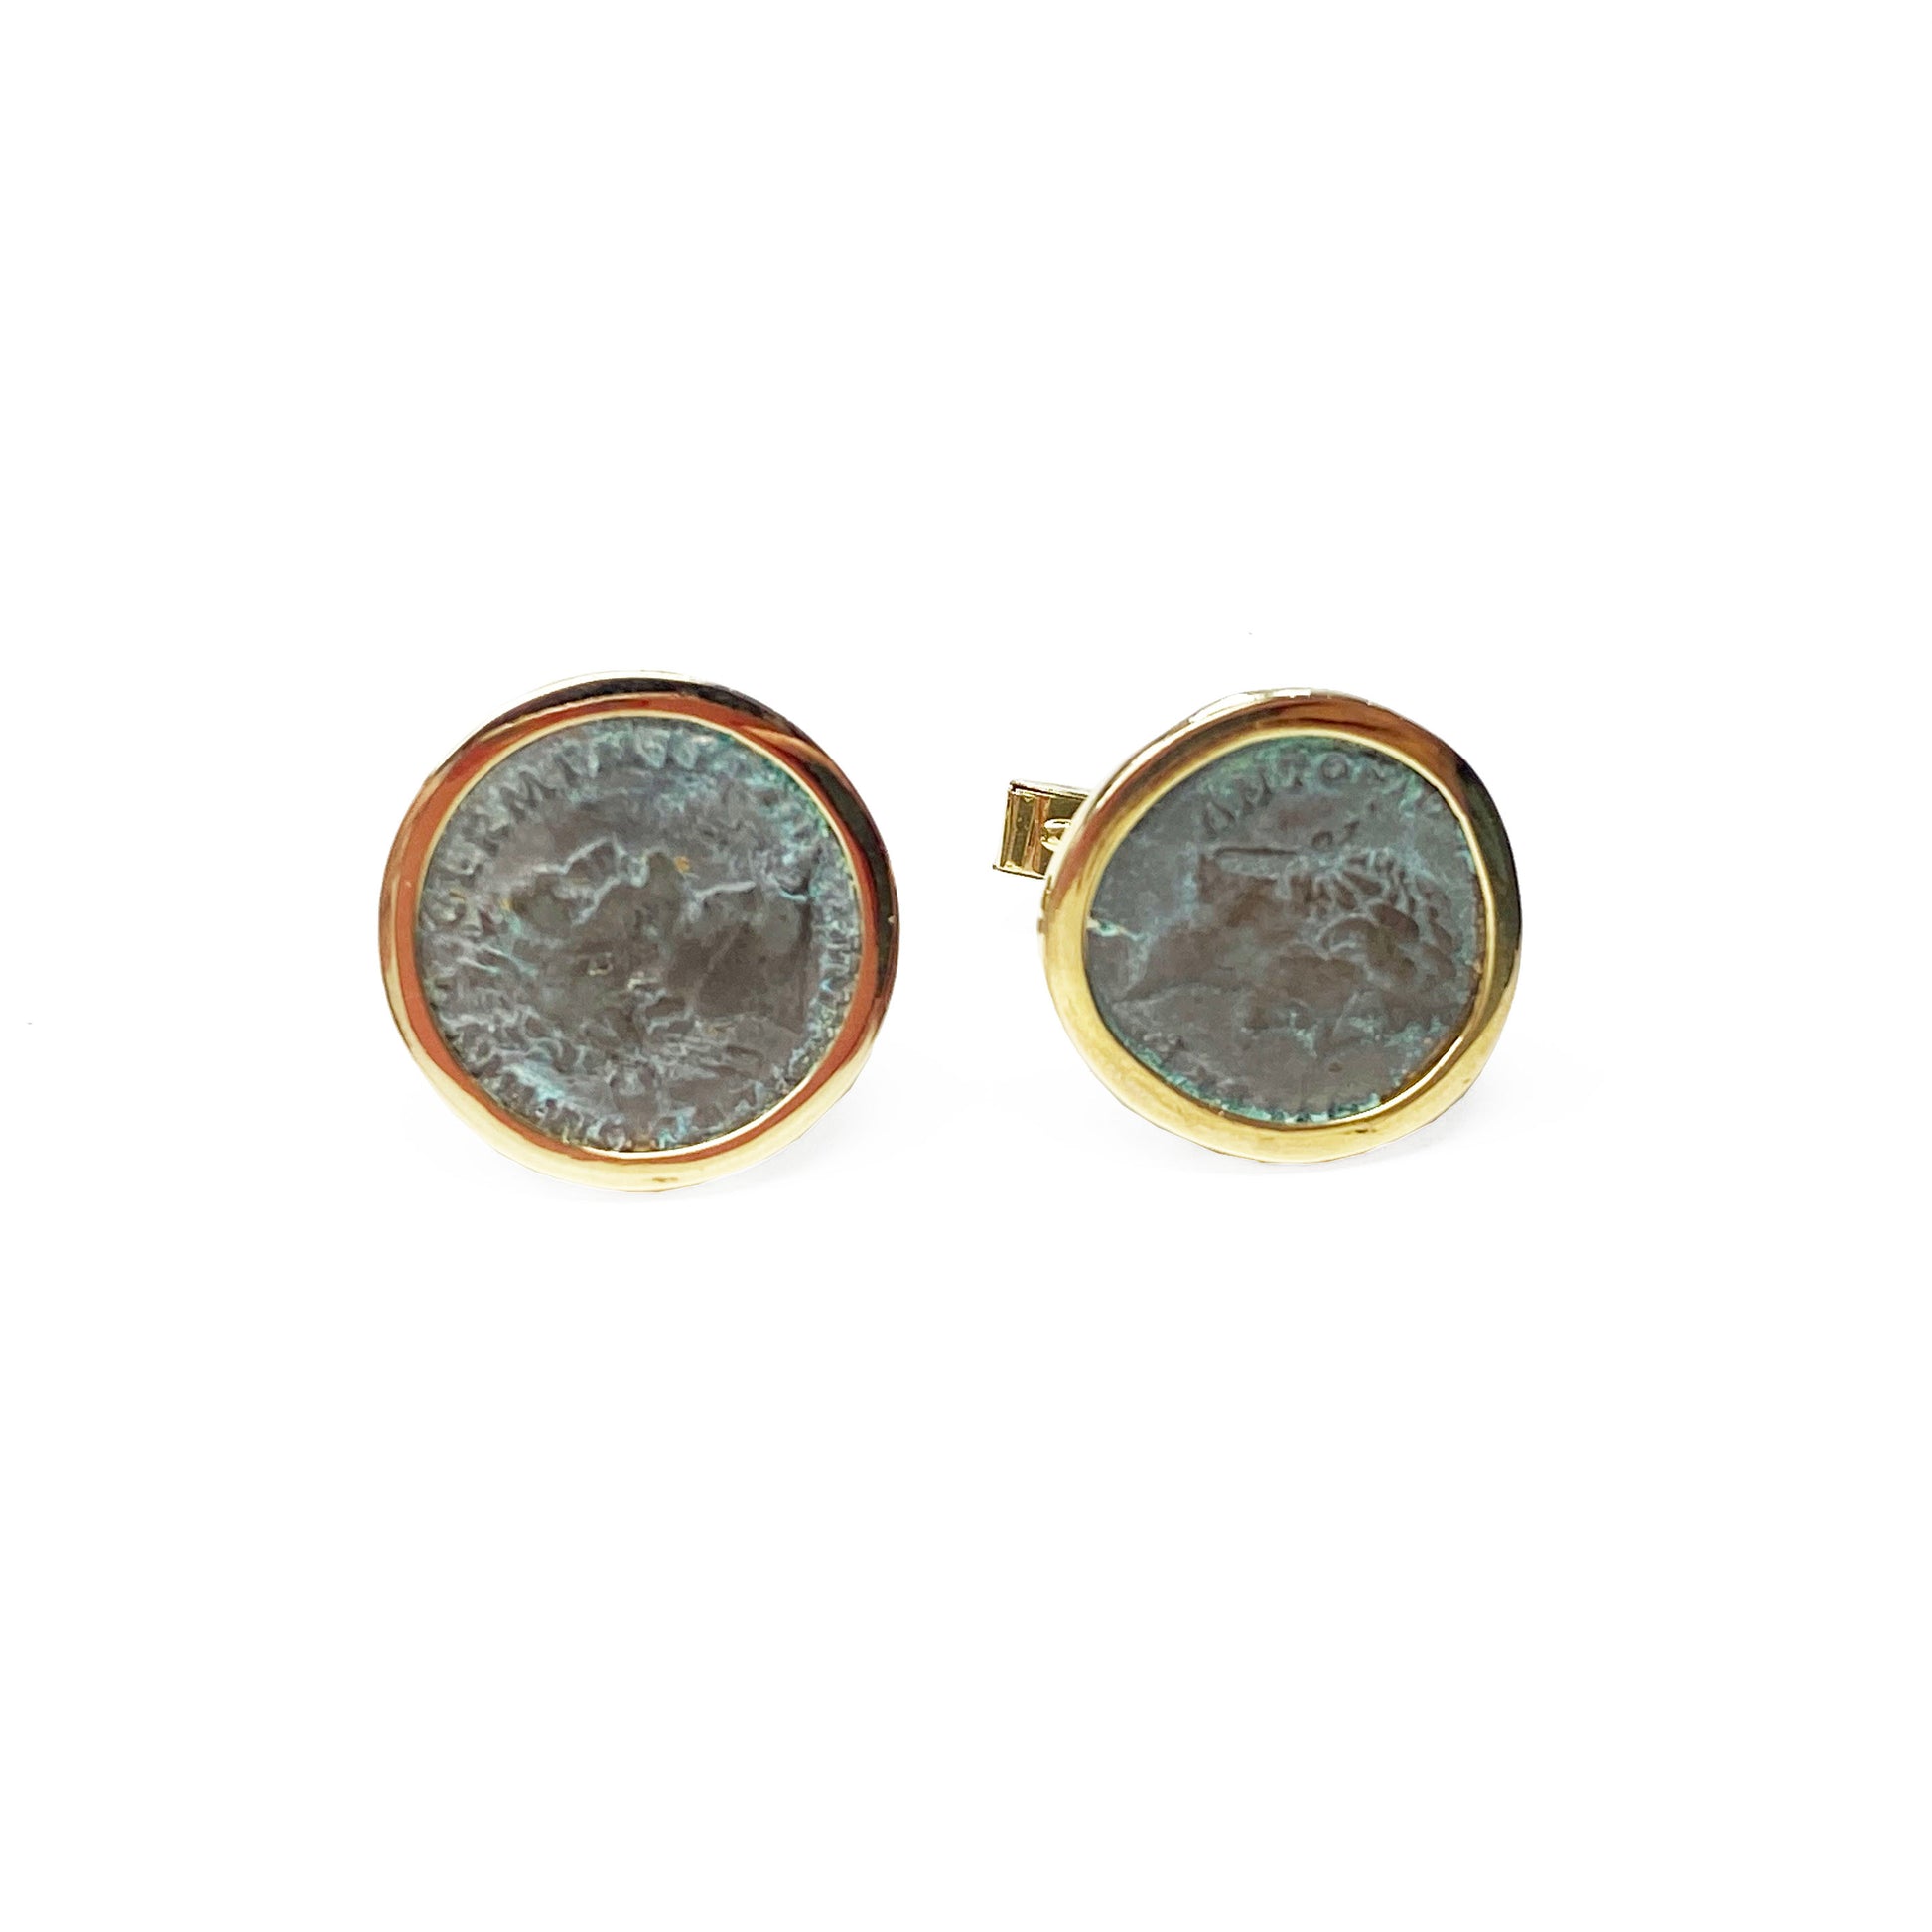 18ky Antique Coin Cufflinks - eklektic jewelry studio